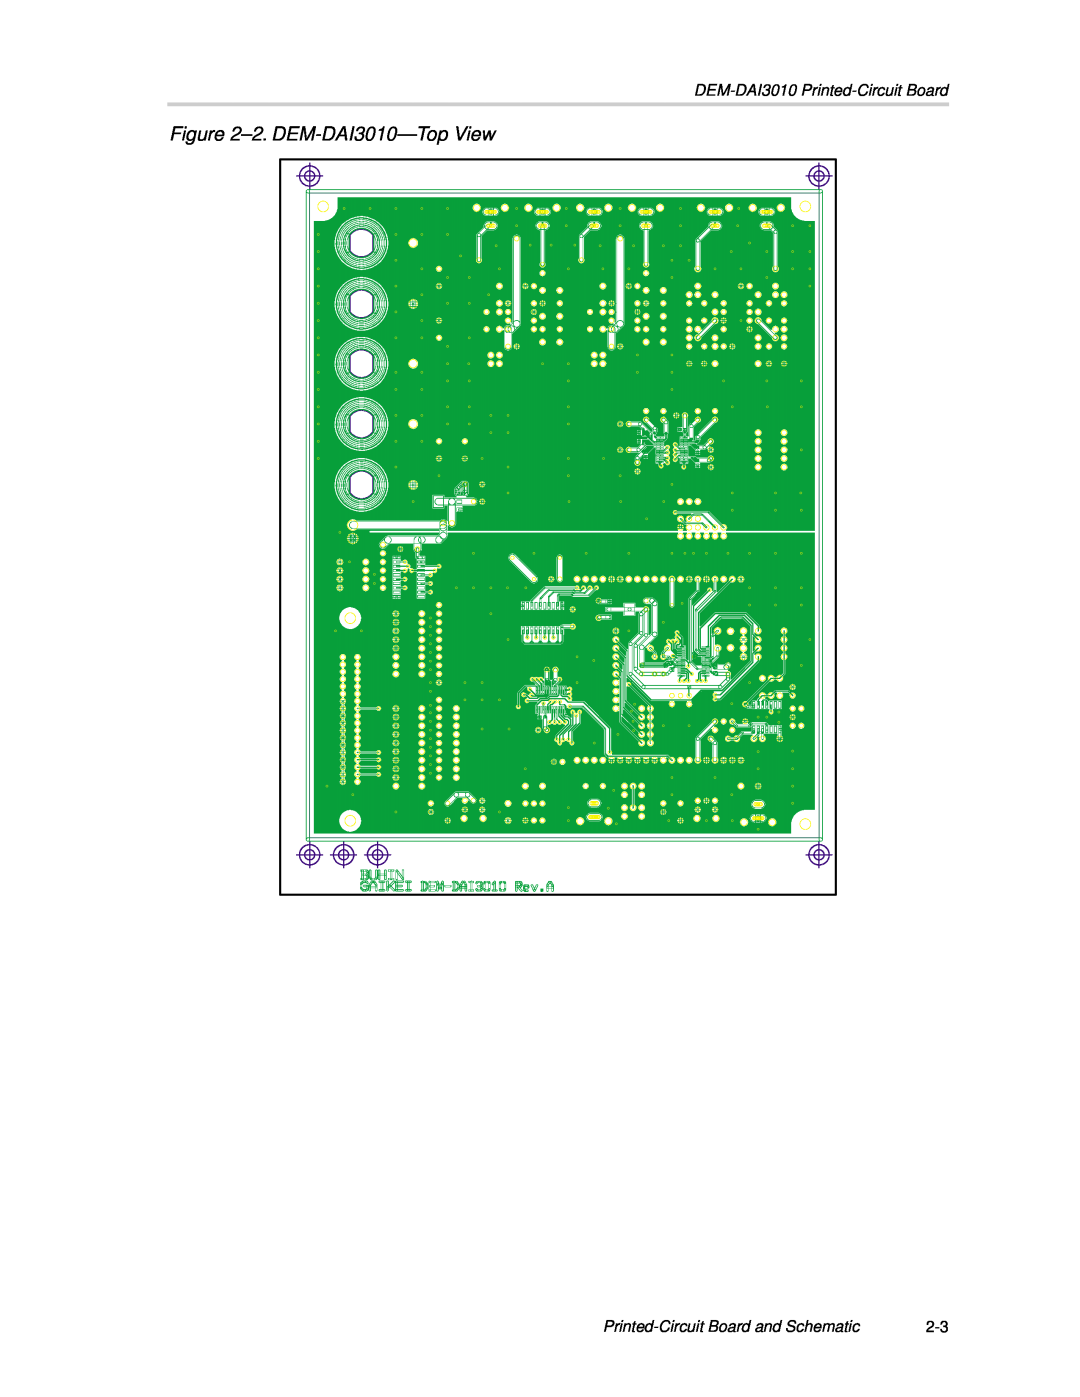 Texas Instruments manual 2. DEM-DAI3010-TopView, DEM-DAI3010 Printed-CircuitBoard, Printed-CircuitBoard and Schematic 